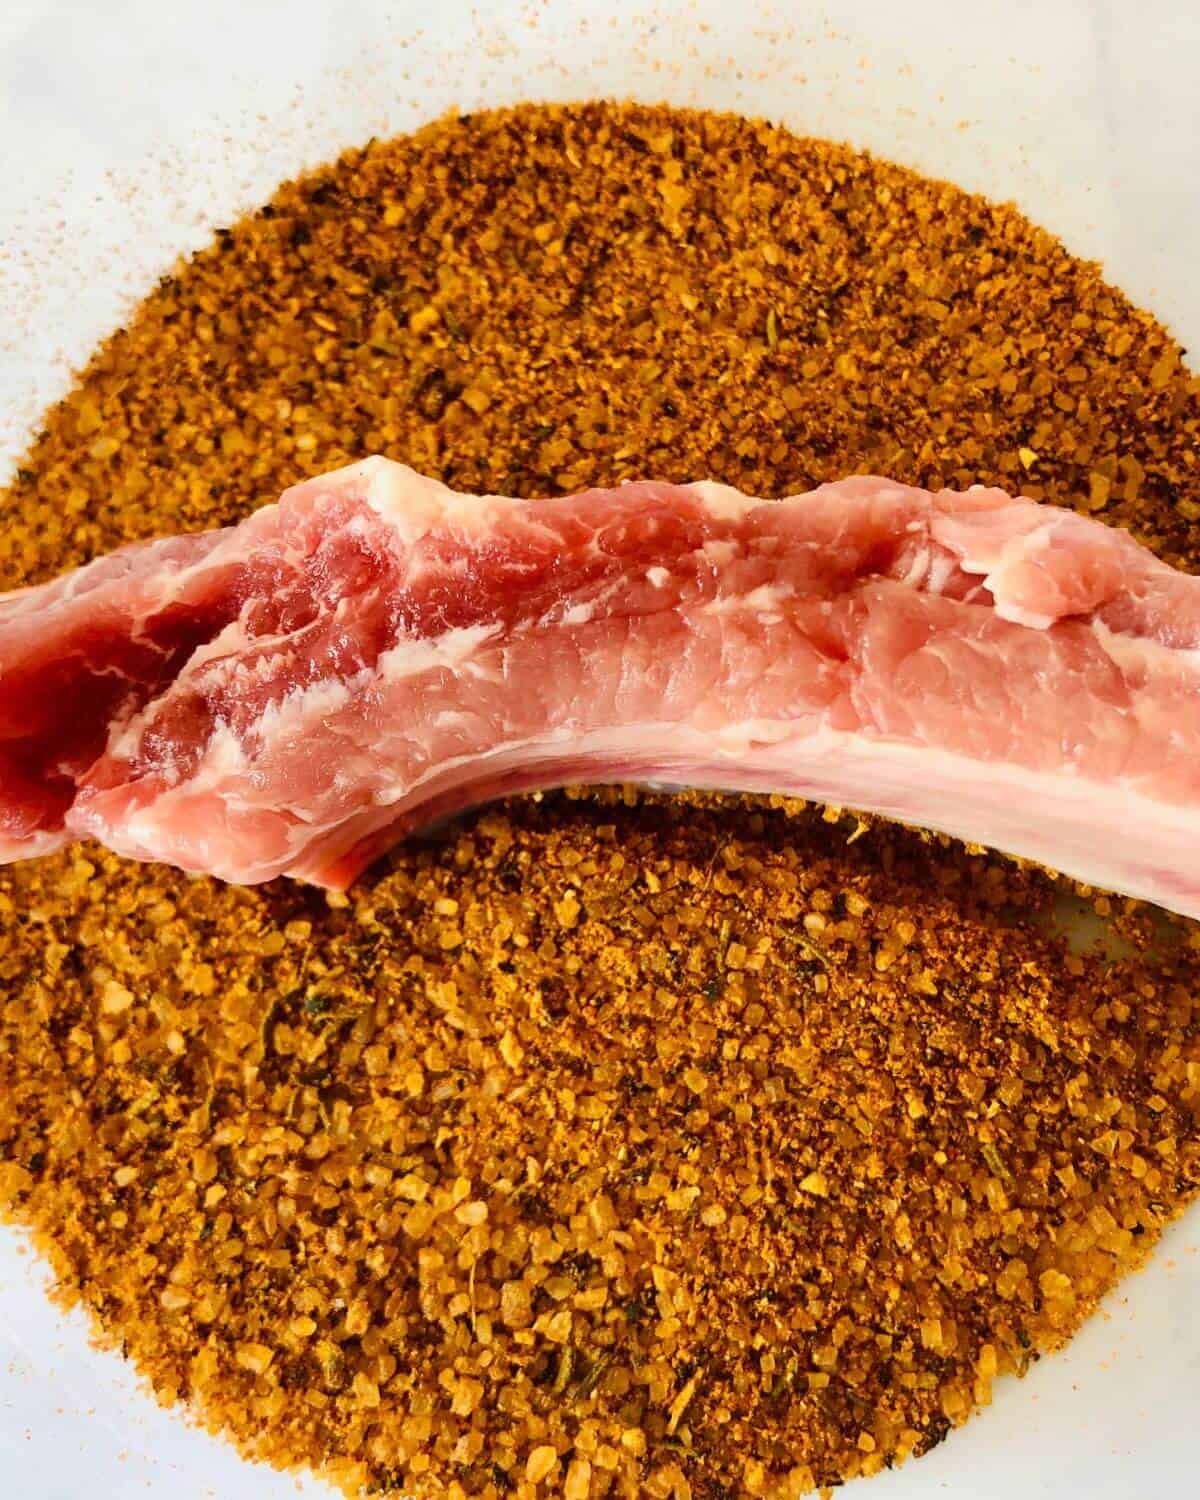 A raw pork rib placed in a bowl of dry rub seasoning.